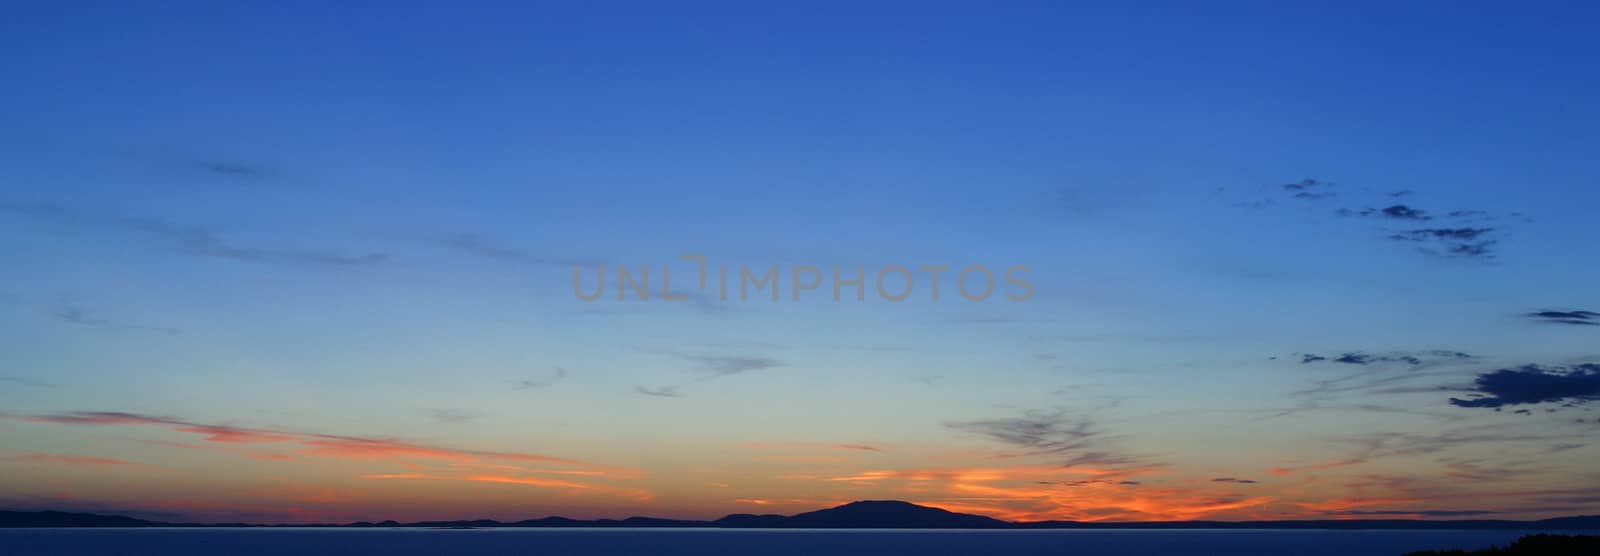 Sundown, Adriatic sea, Croatia by atlas